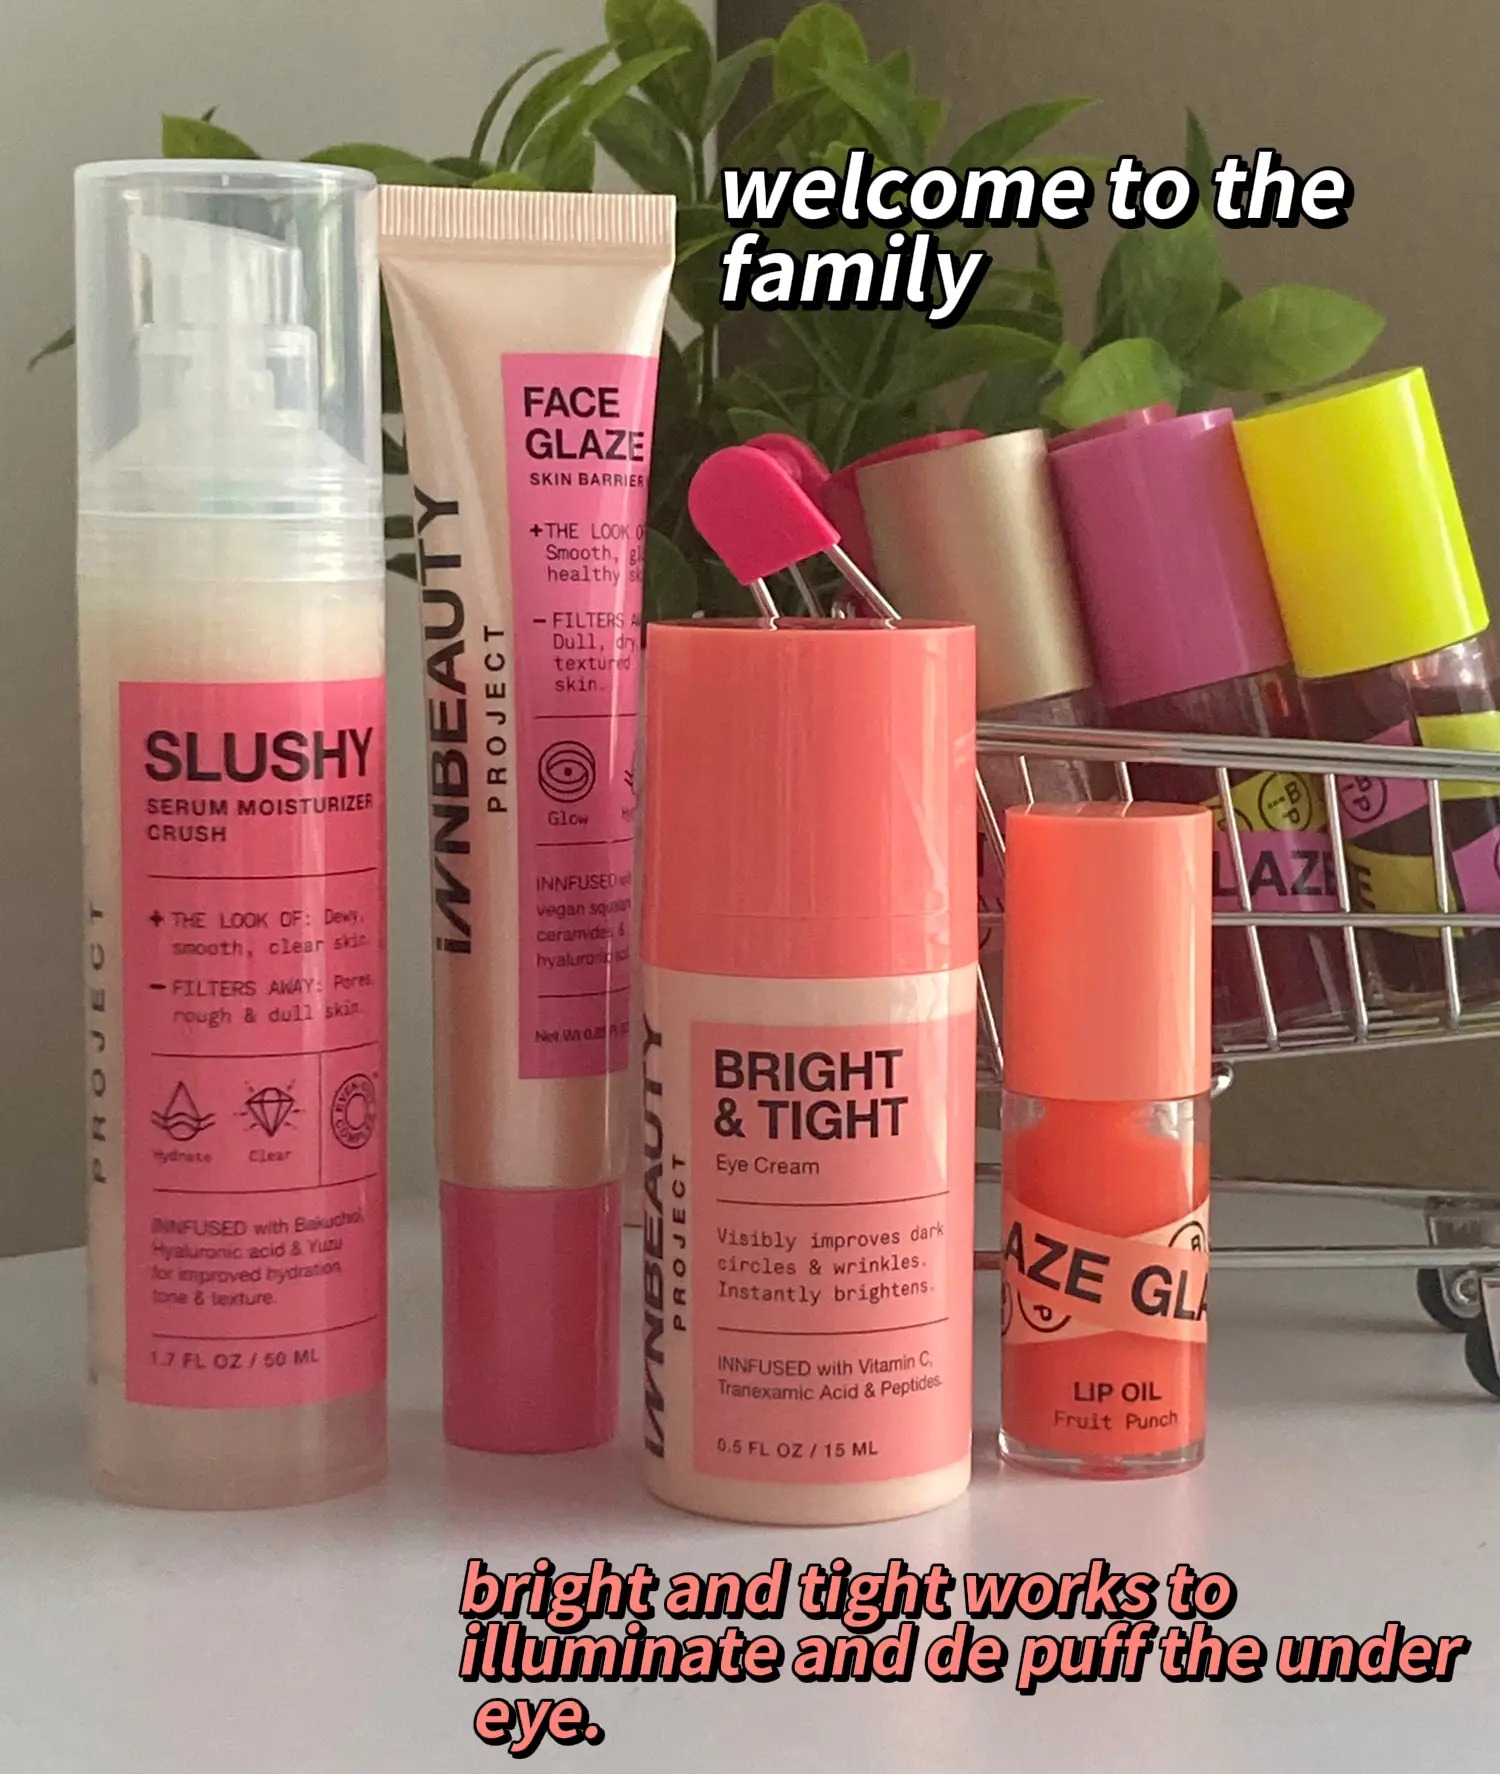 Bright & Tight Eye Cream – INNBEAUTY PROJECT